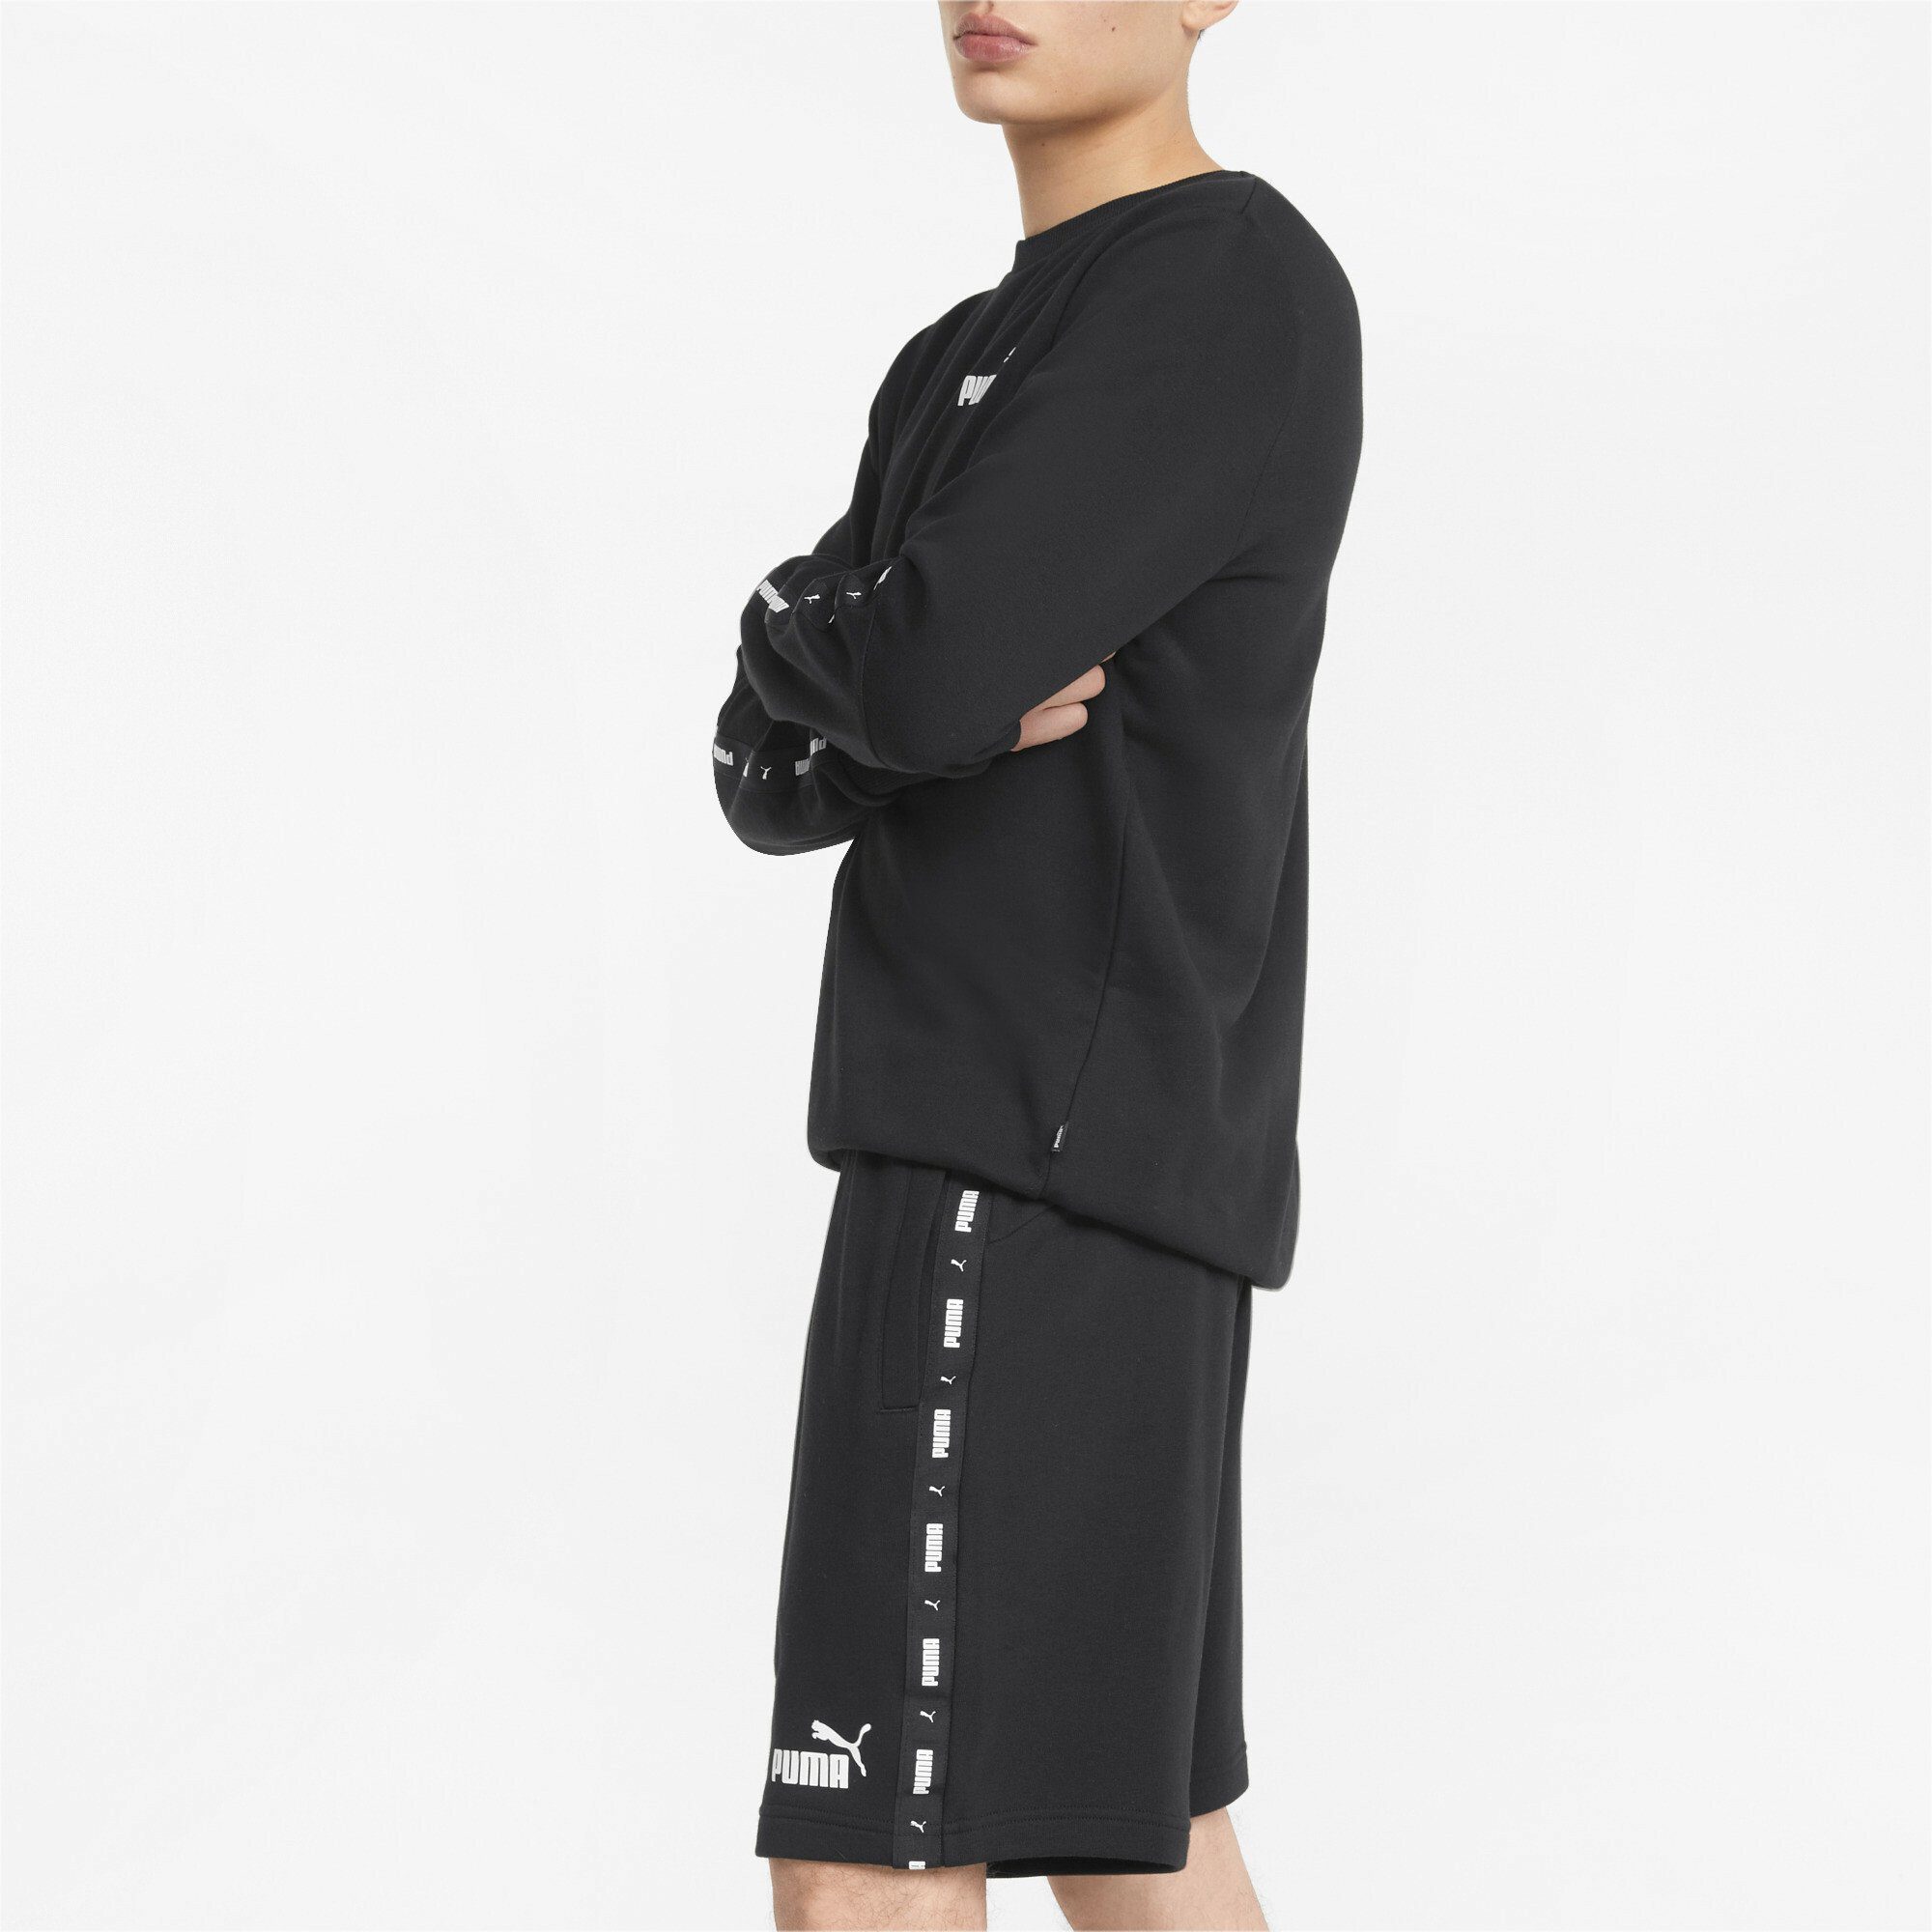 PUMA Sporthose Essentials+ Shorts Herren Black